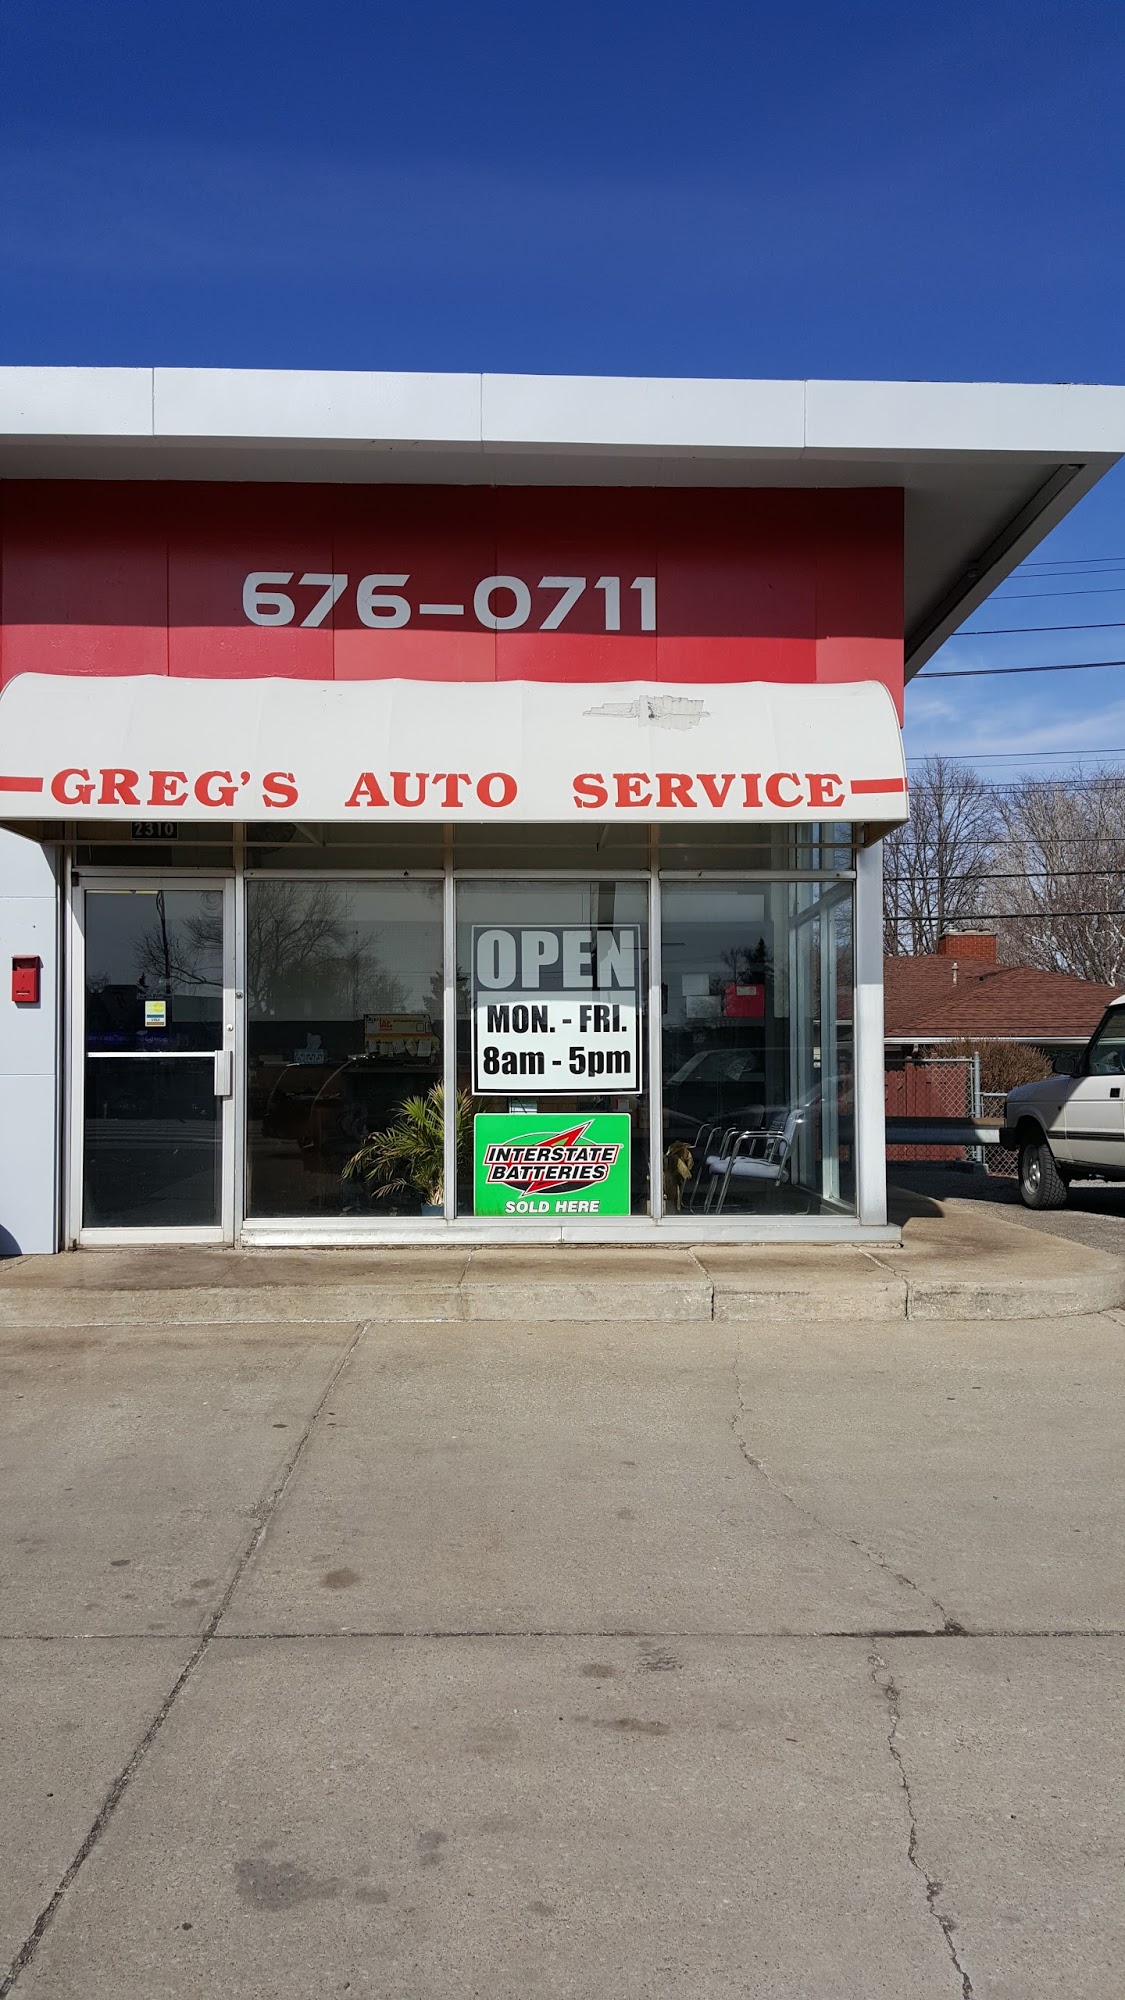 Greg's Auto Services